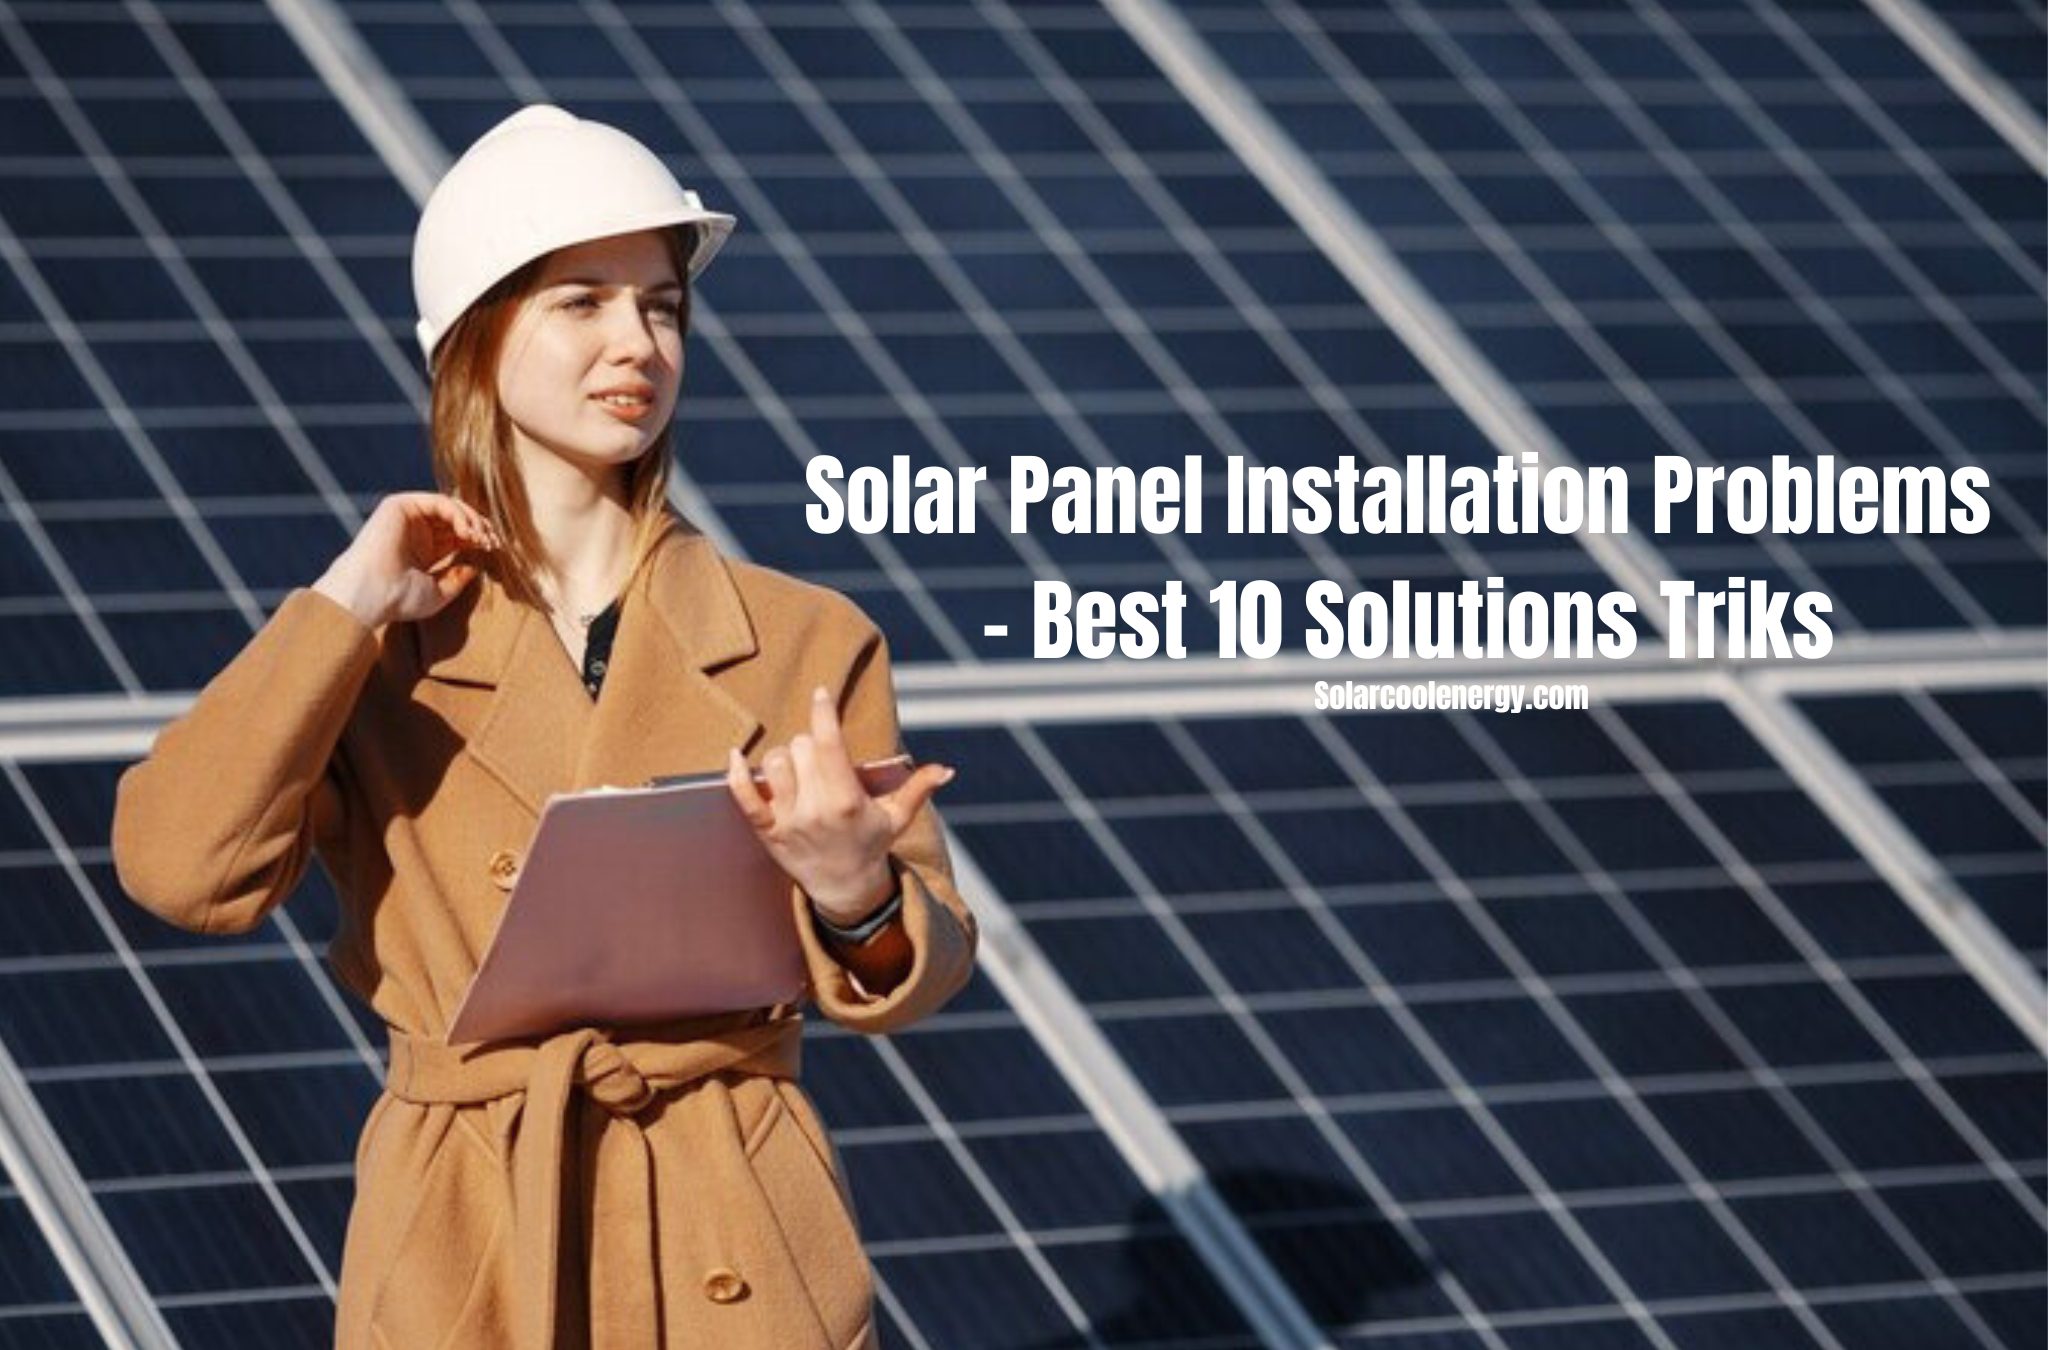 Solar panel installation problems